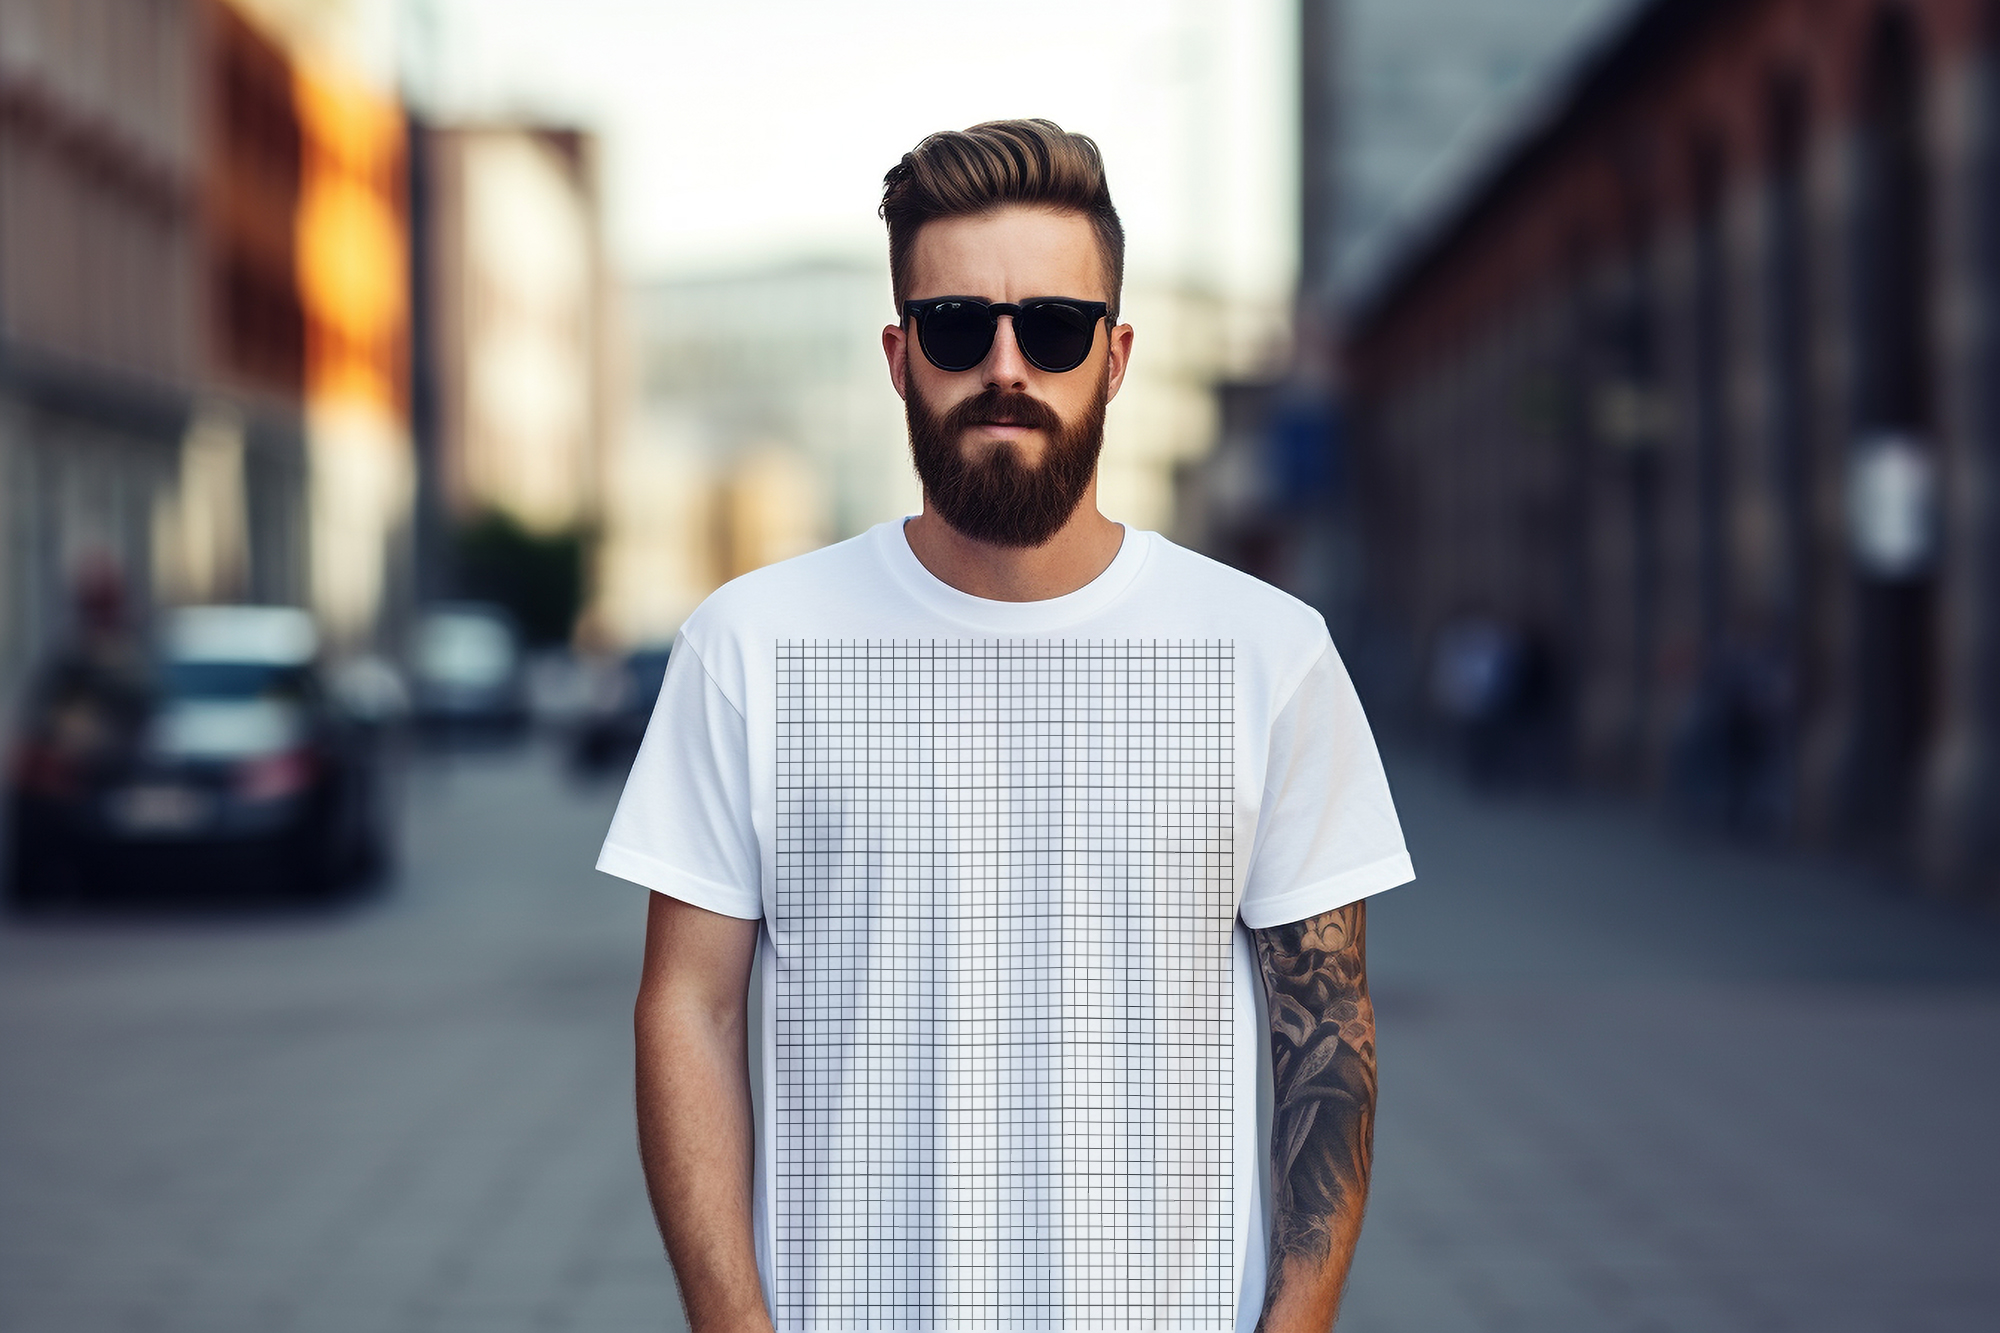 Beard man wearing t-shirt mockup on street grid